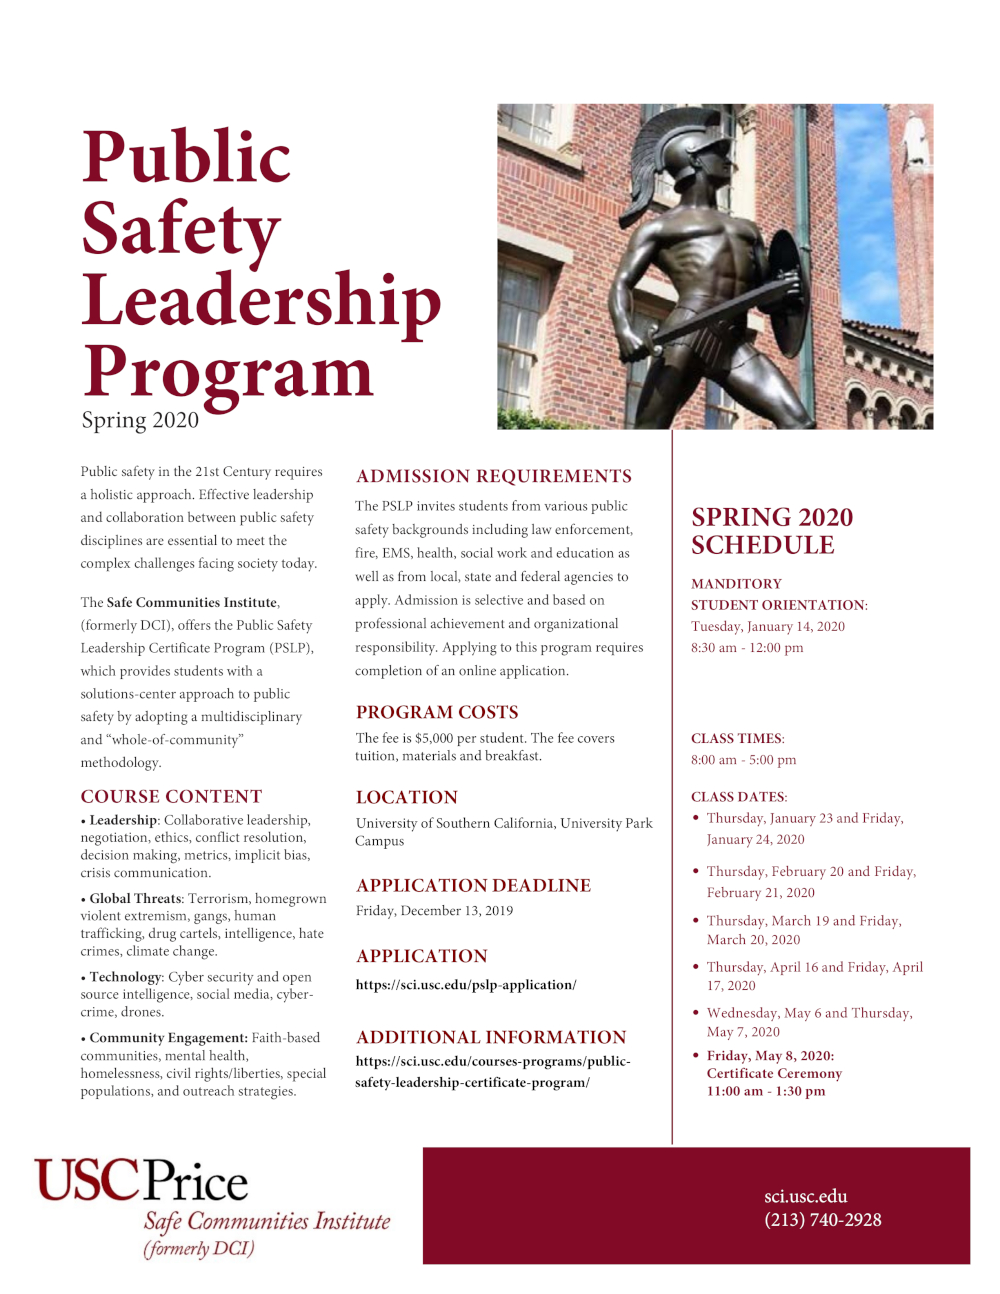 USC SCI public safety leadership program